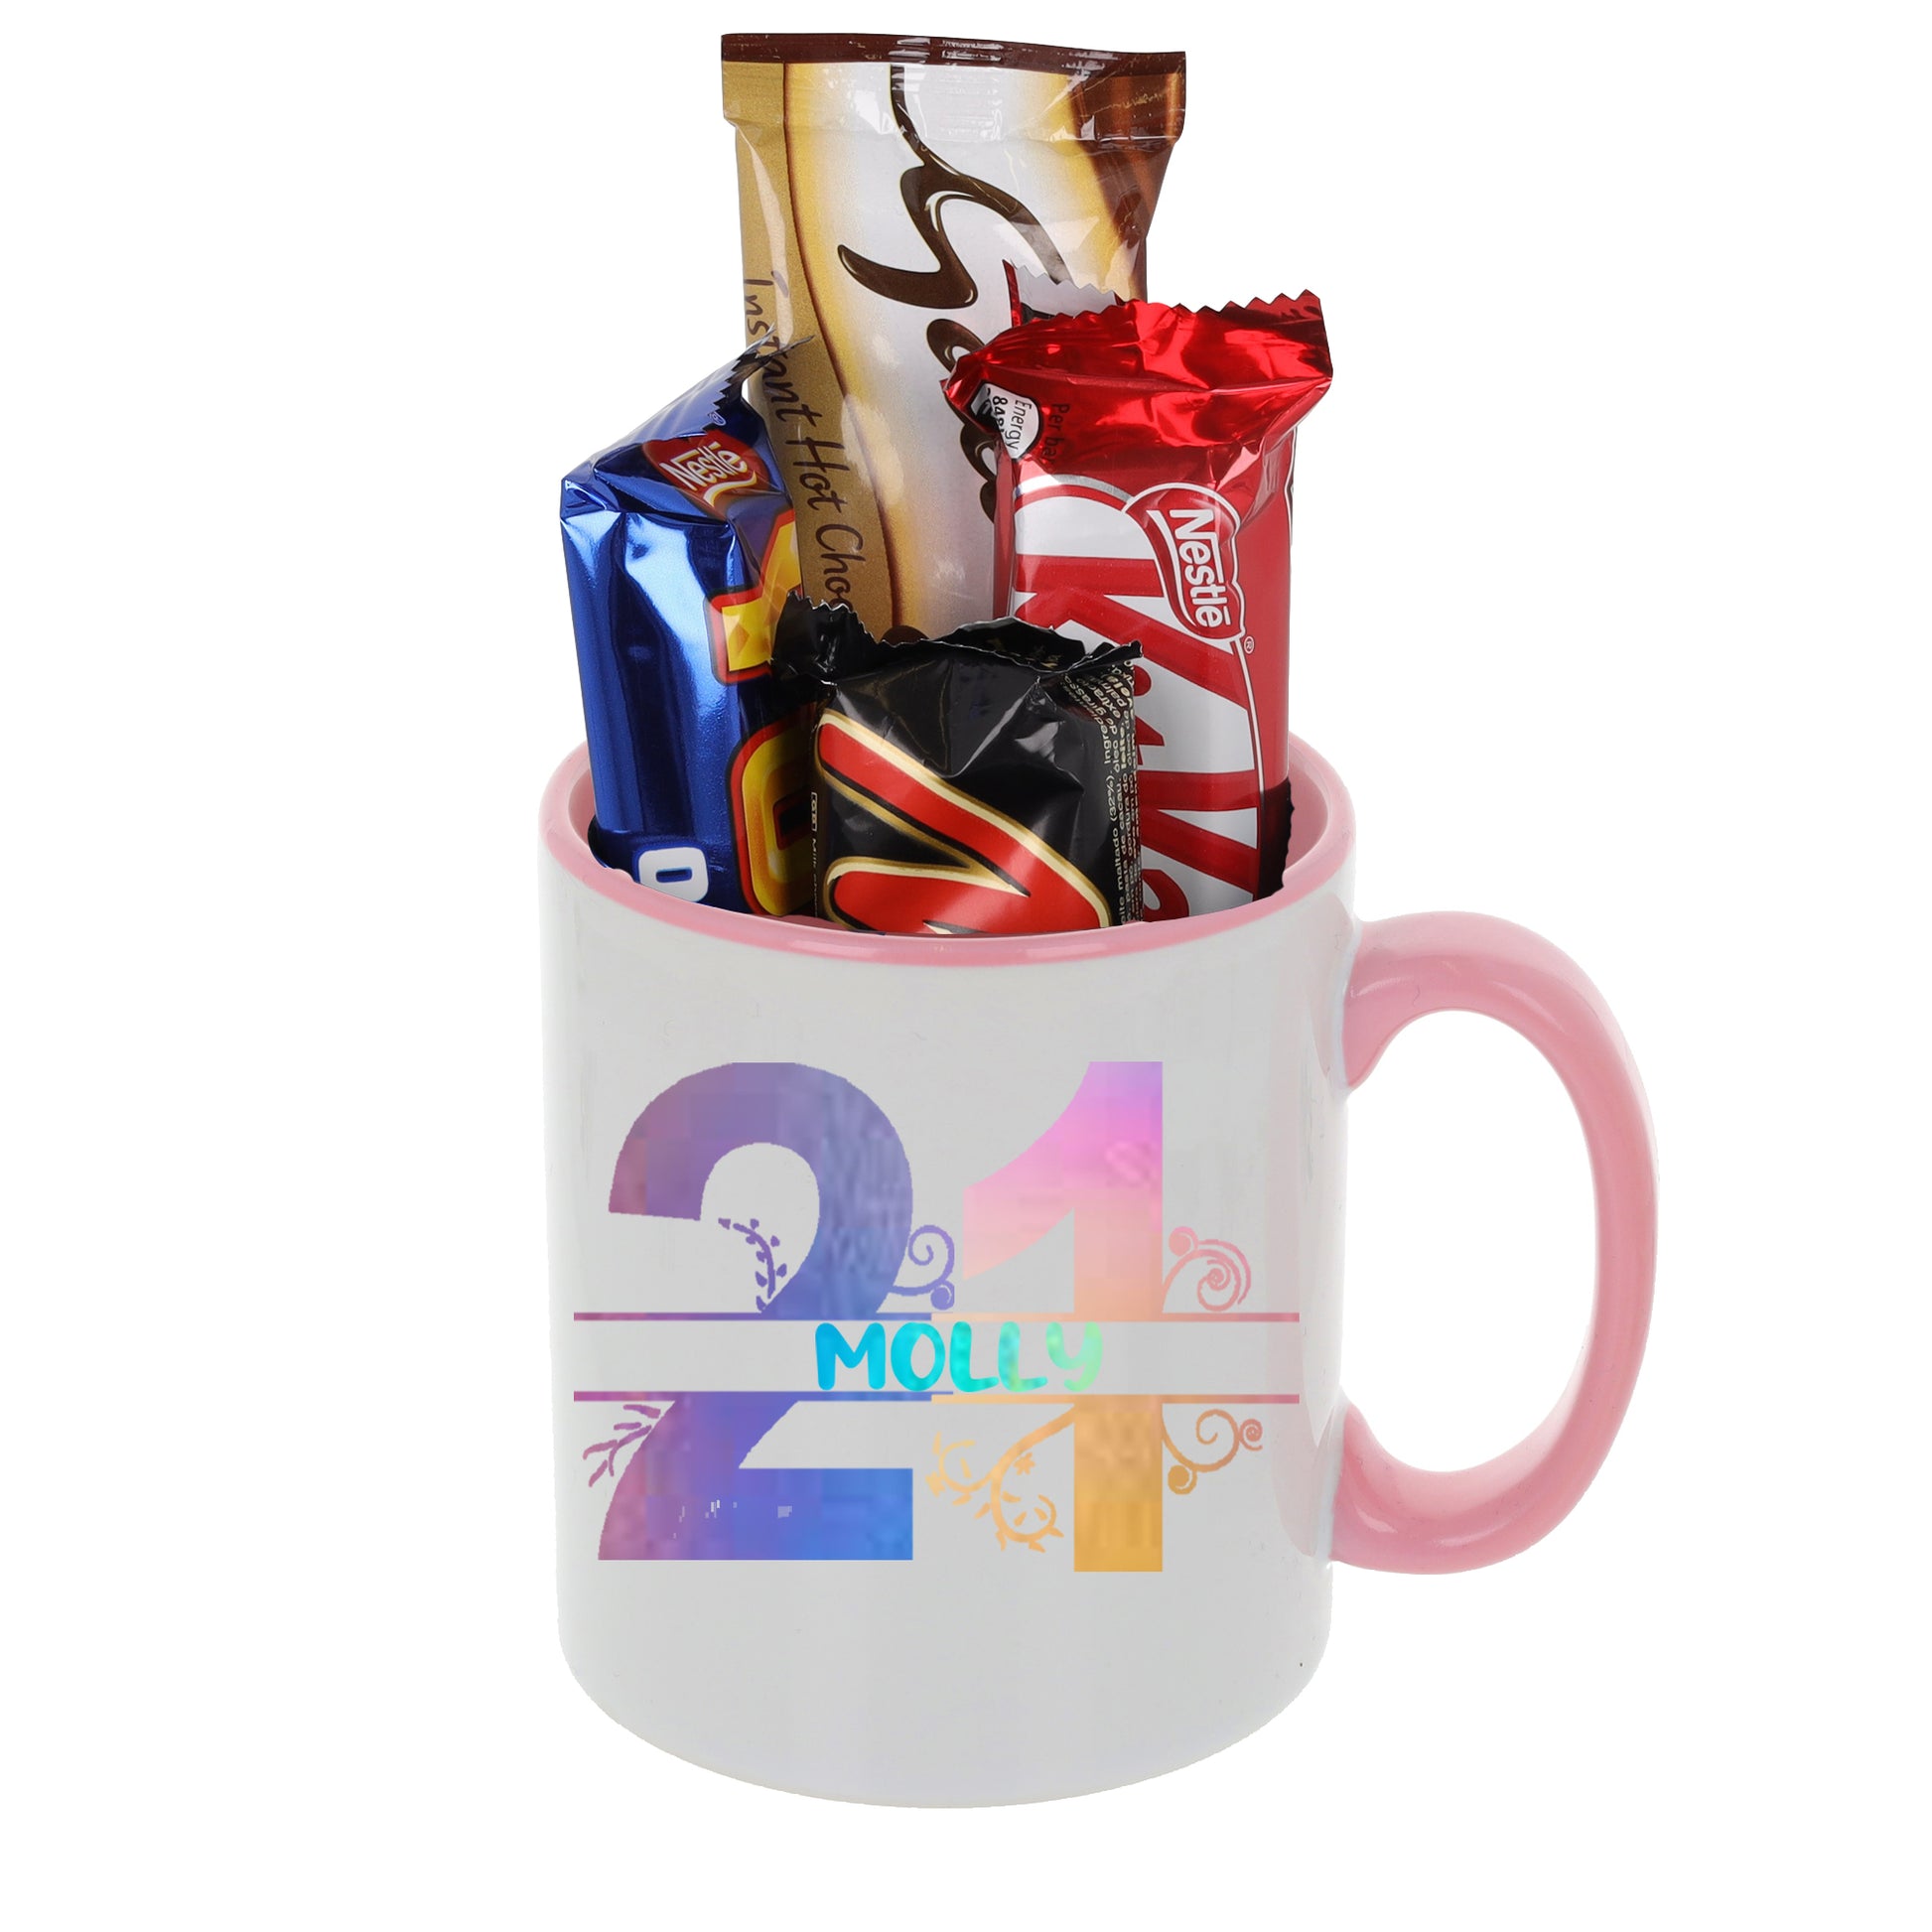 Personalised Filled 21st Birthday Mug  - Always Looking Good - Pink Filled Mug  